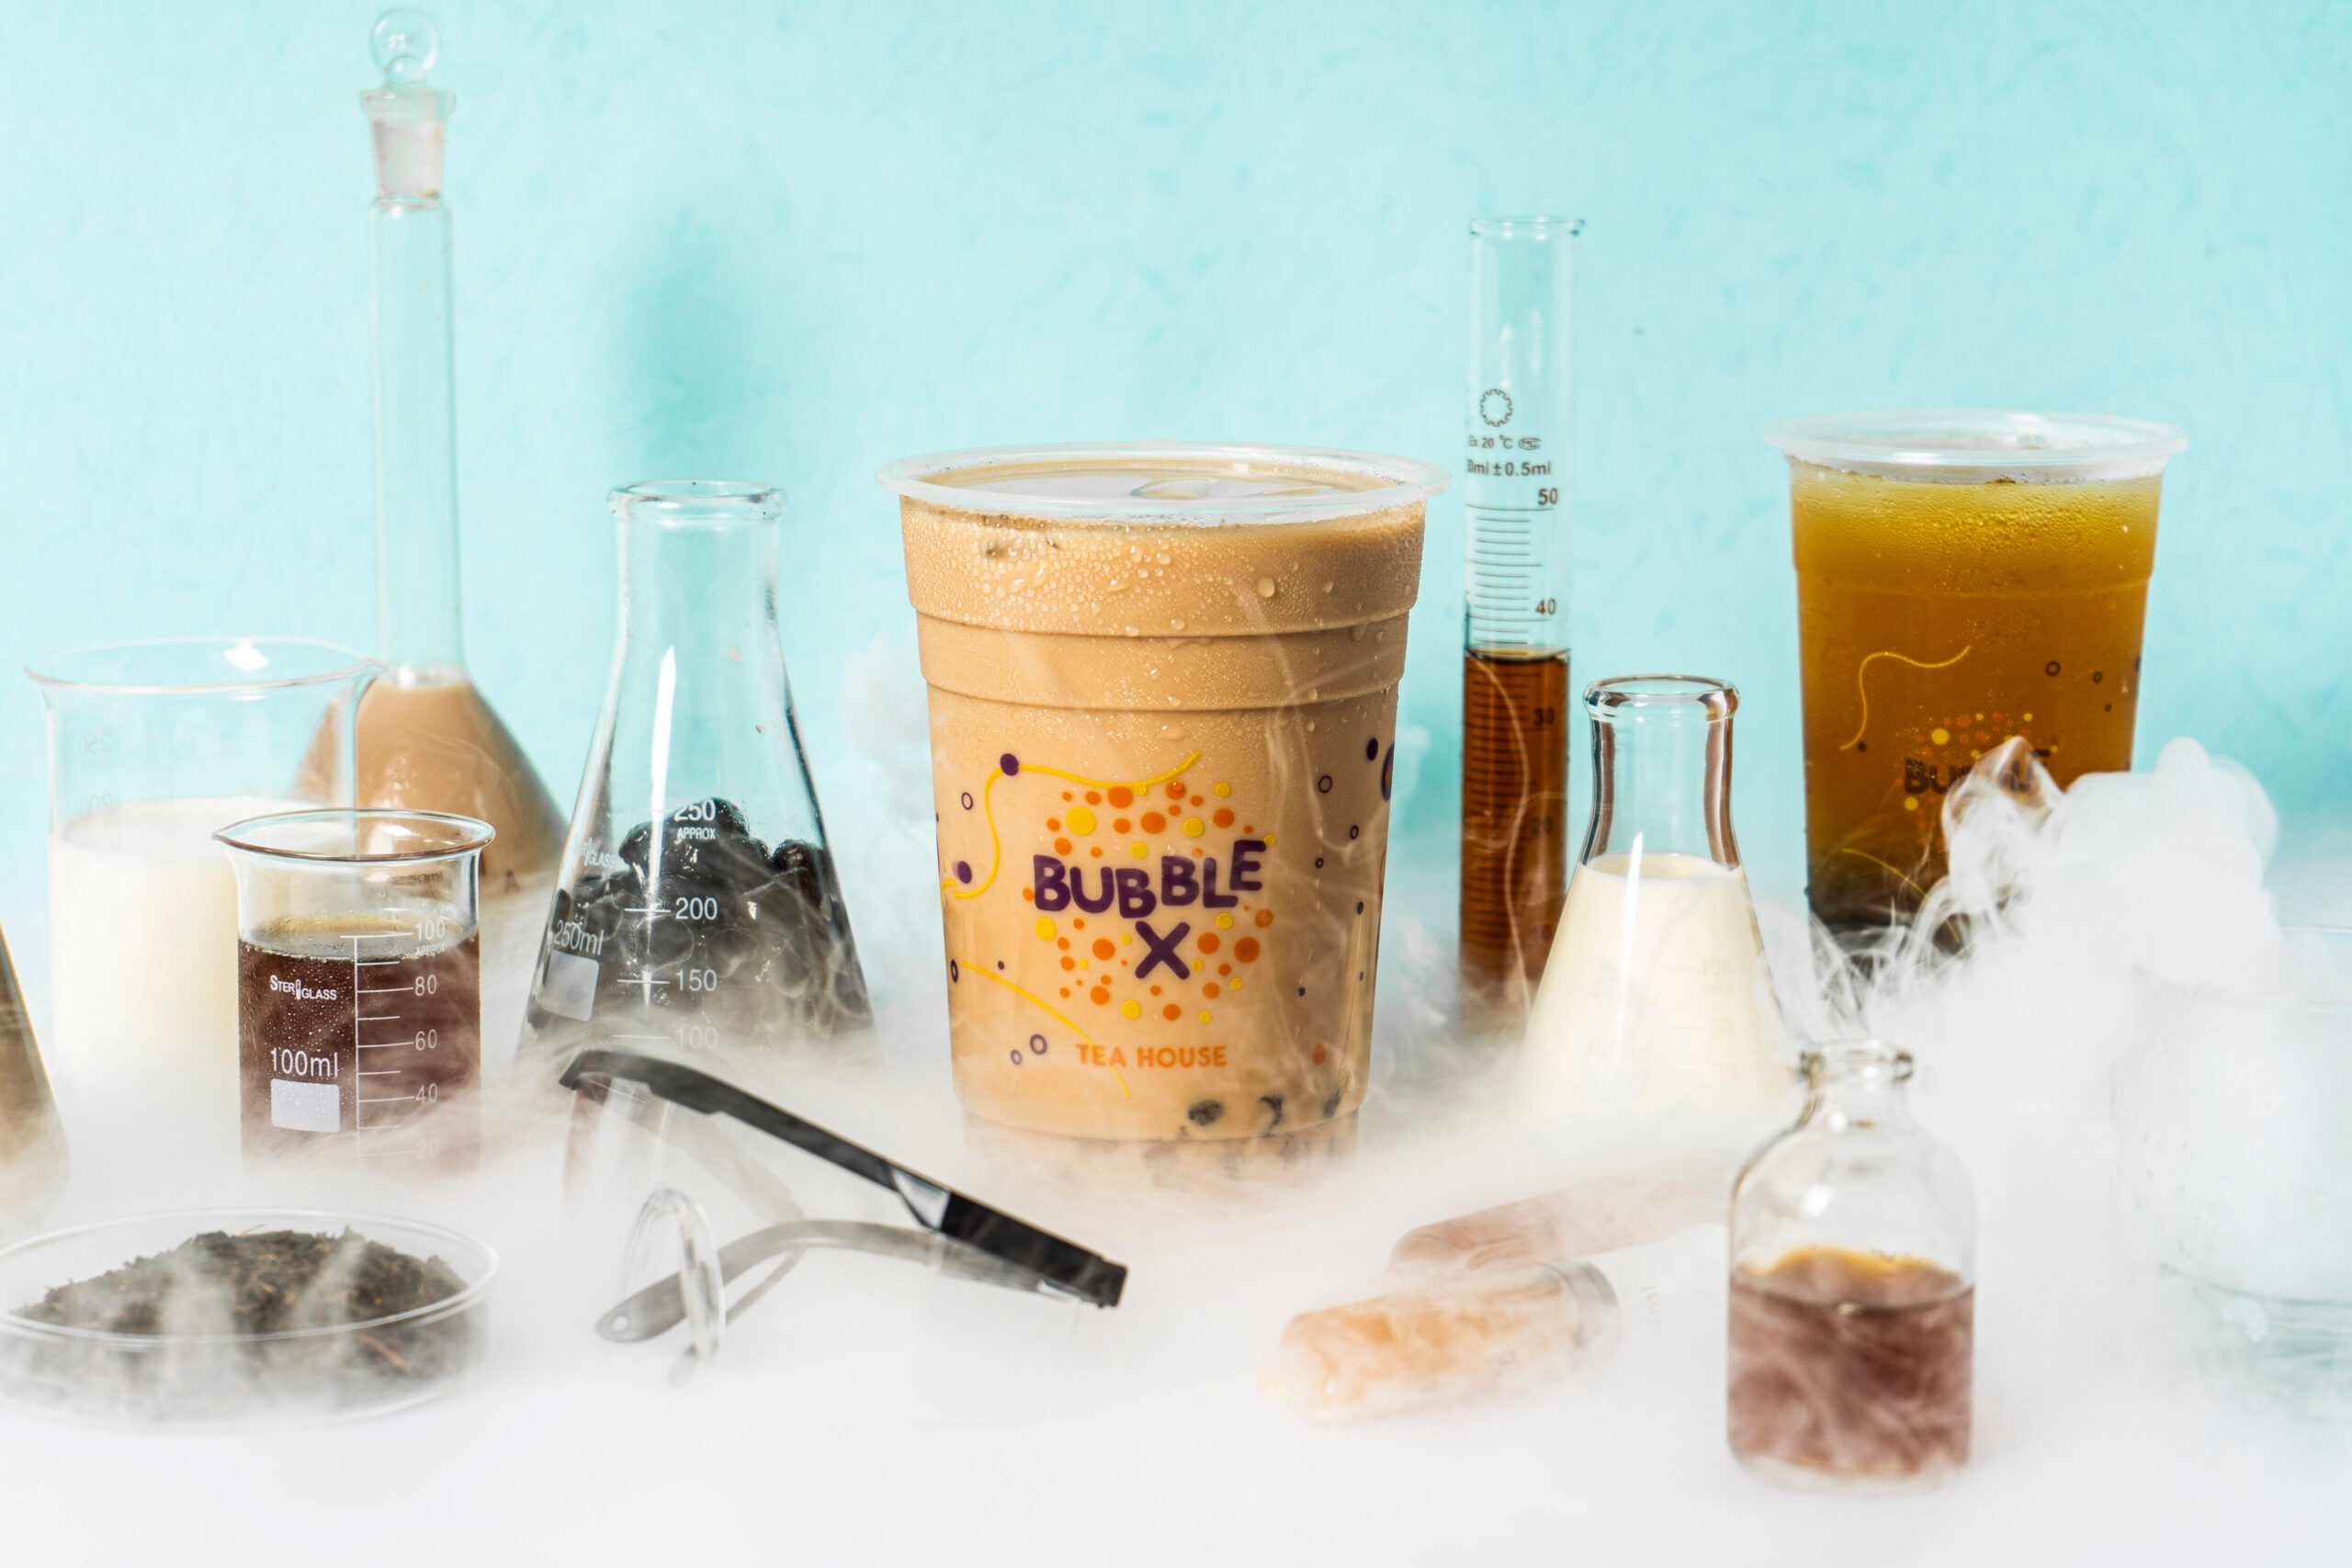 Bubble X: Manila’s newest experimental milk tea